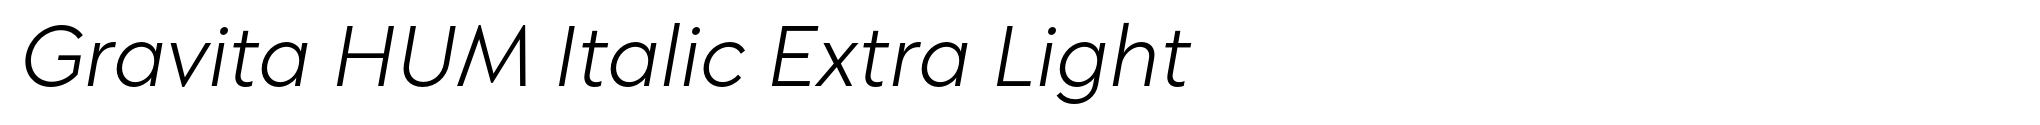 Gravita HUM Italic Extra Light image